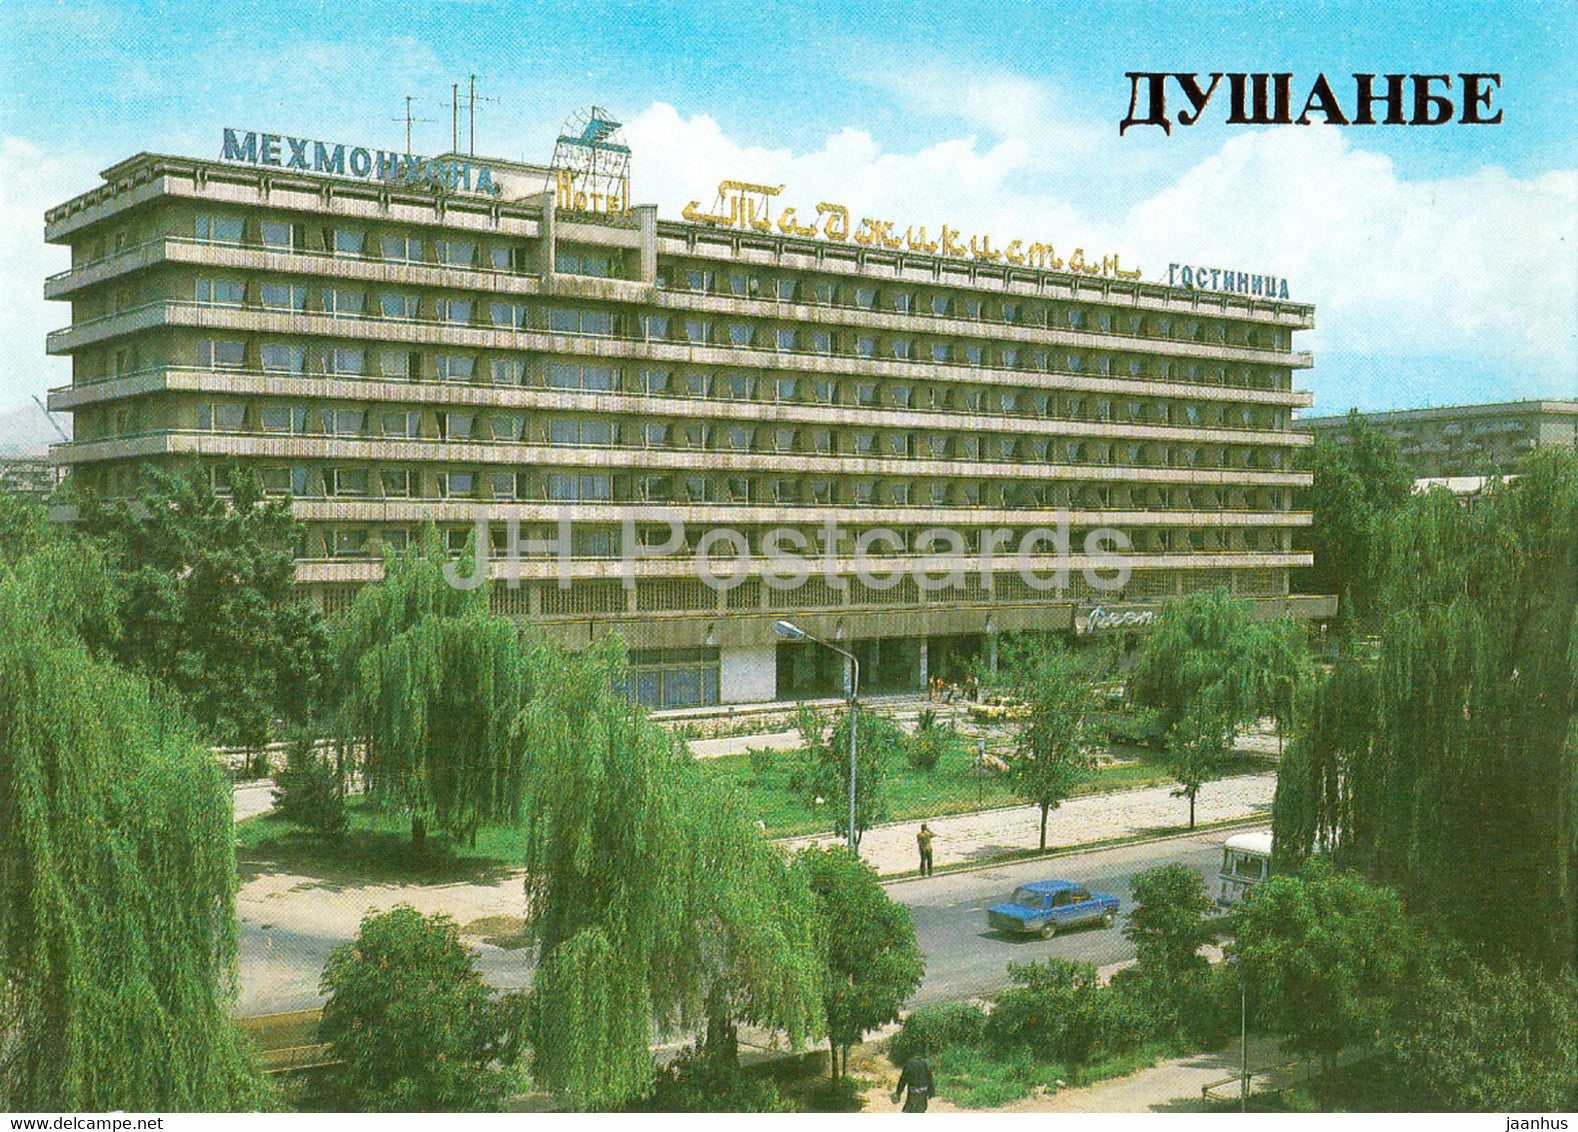 Dushanbe - Tajikistan hotel - 1985 - Tajikistan USSR - unused - JH Postcards